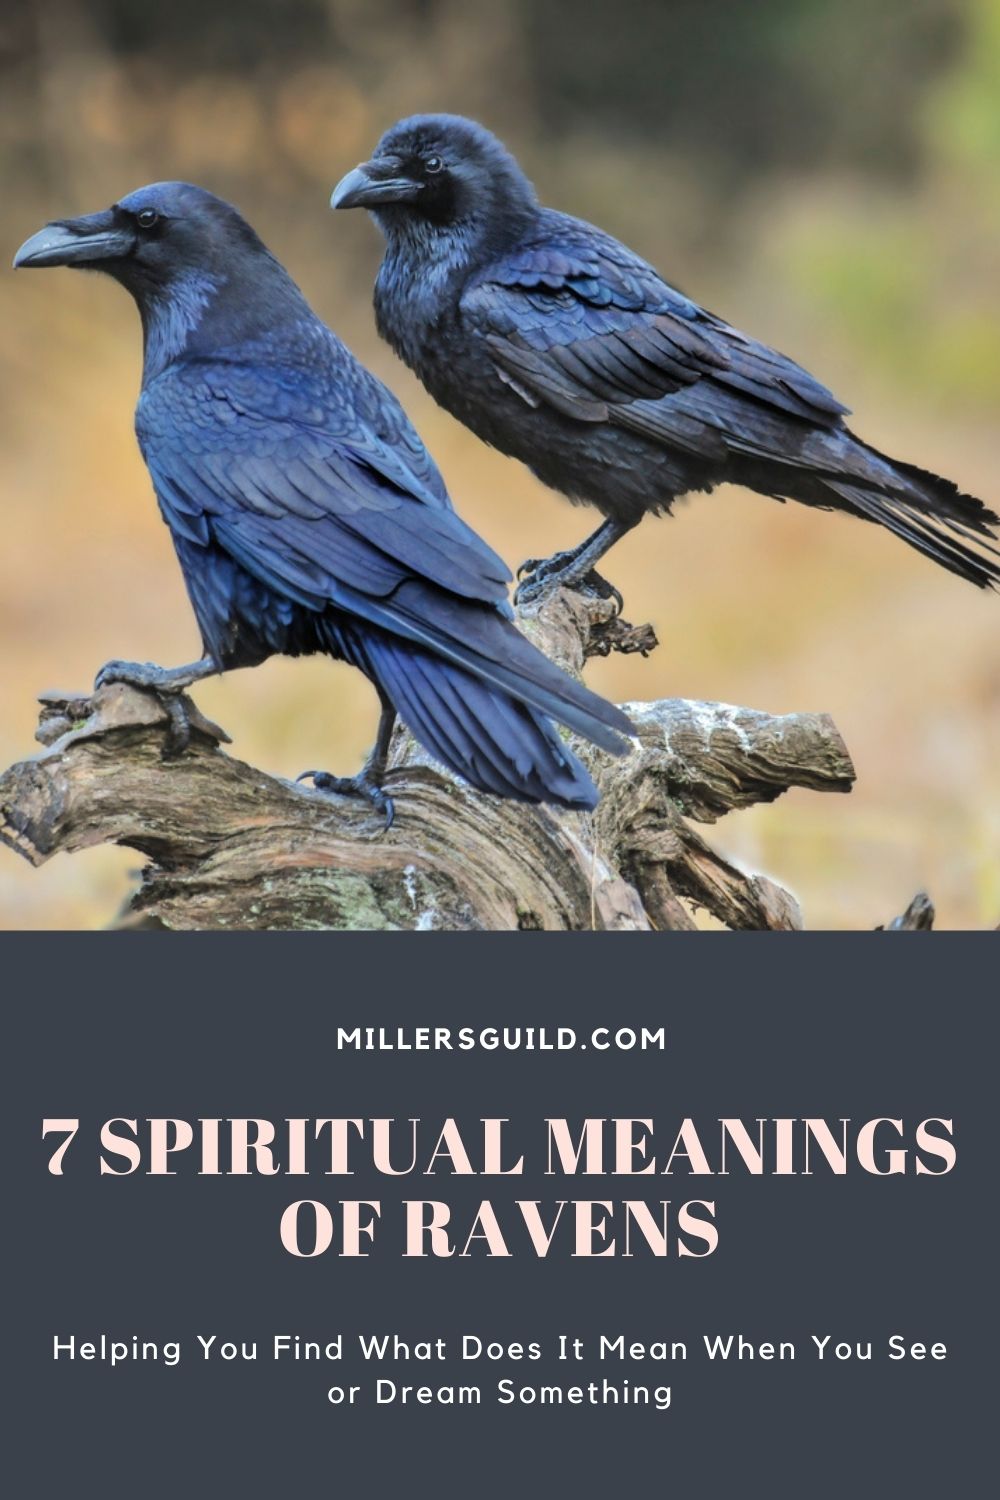 7 Spiritual Meanings of Ravens